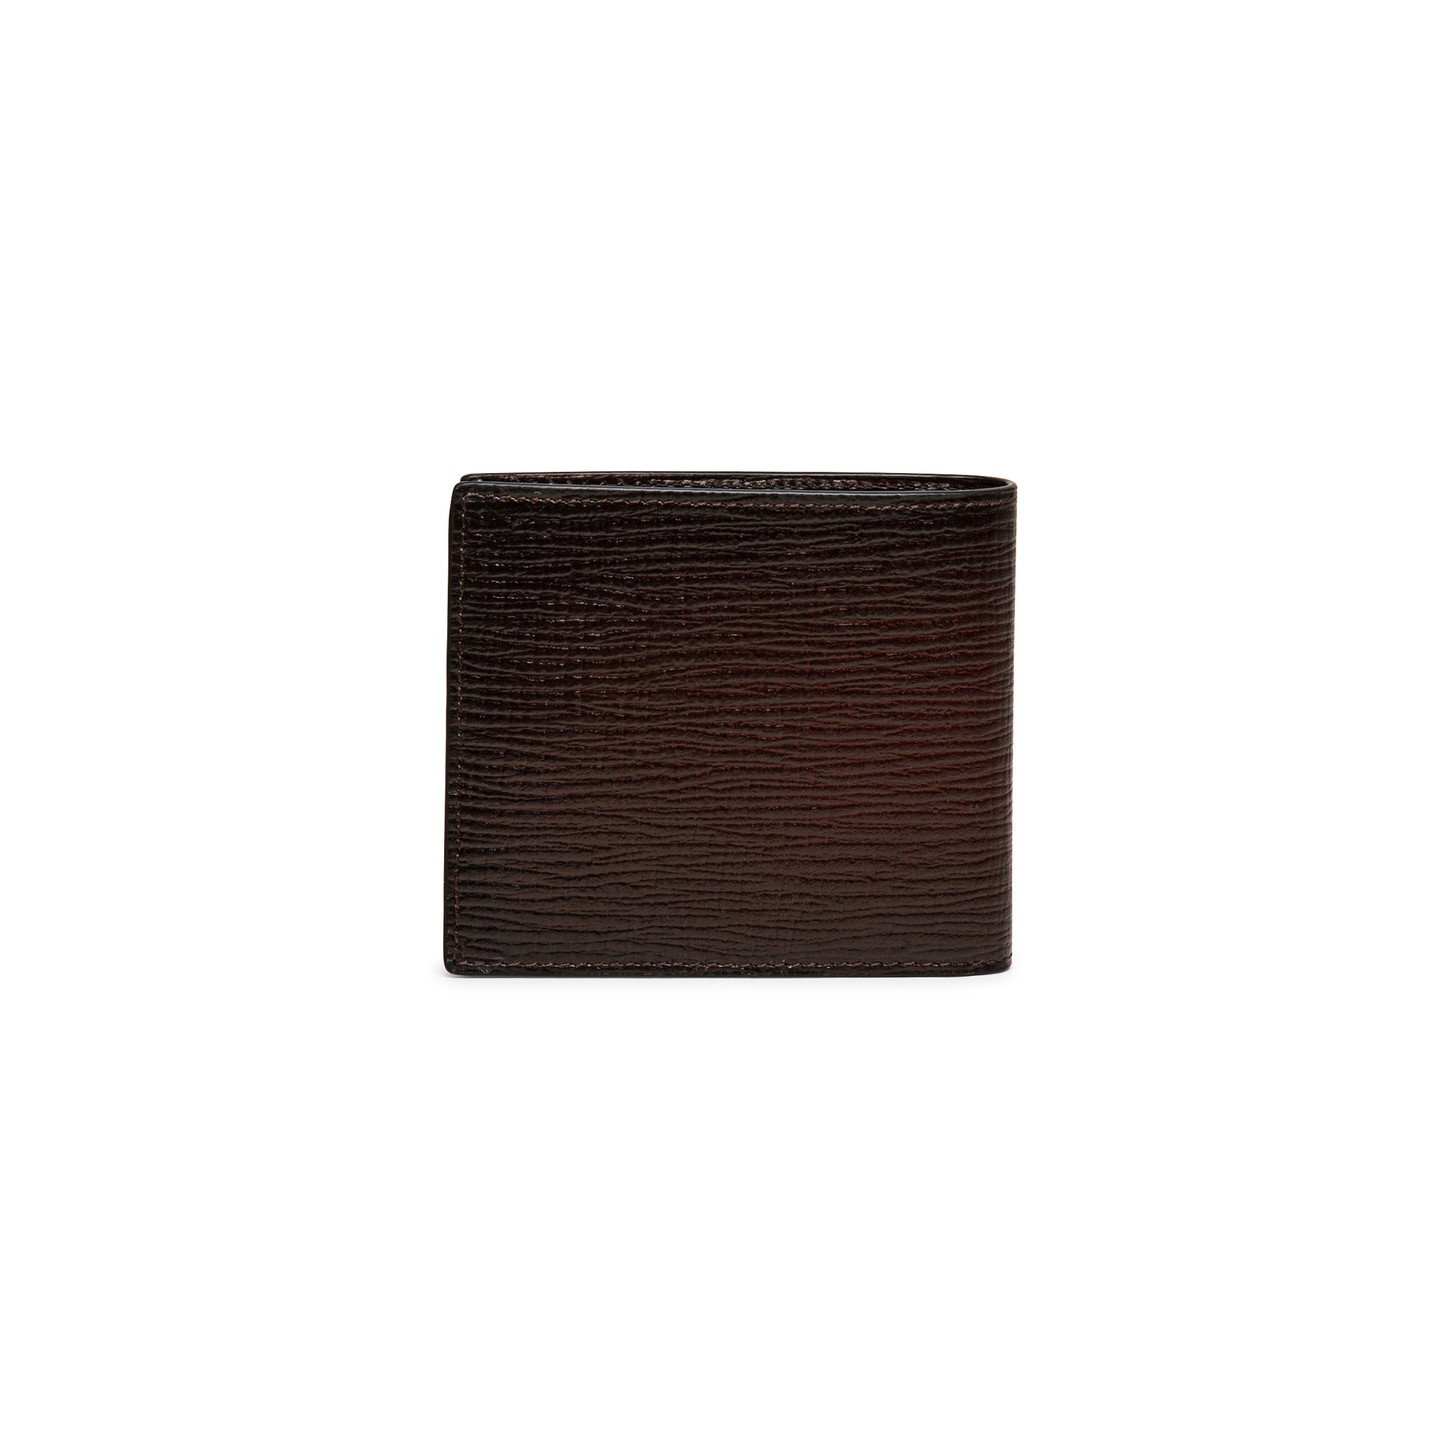 Brown embossed leather wallet - 4